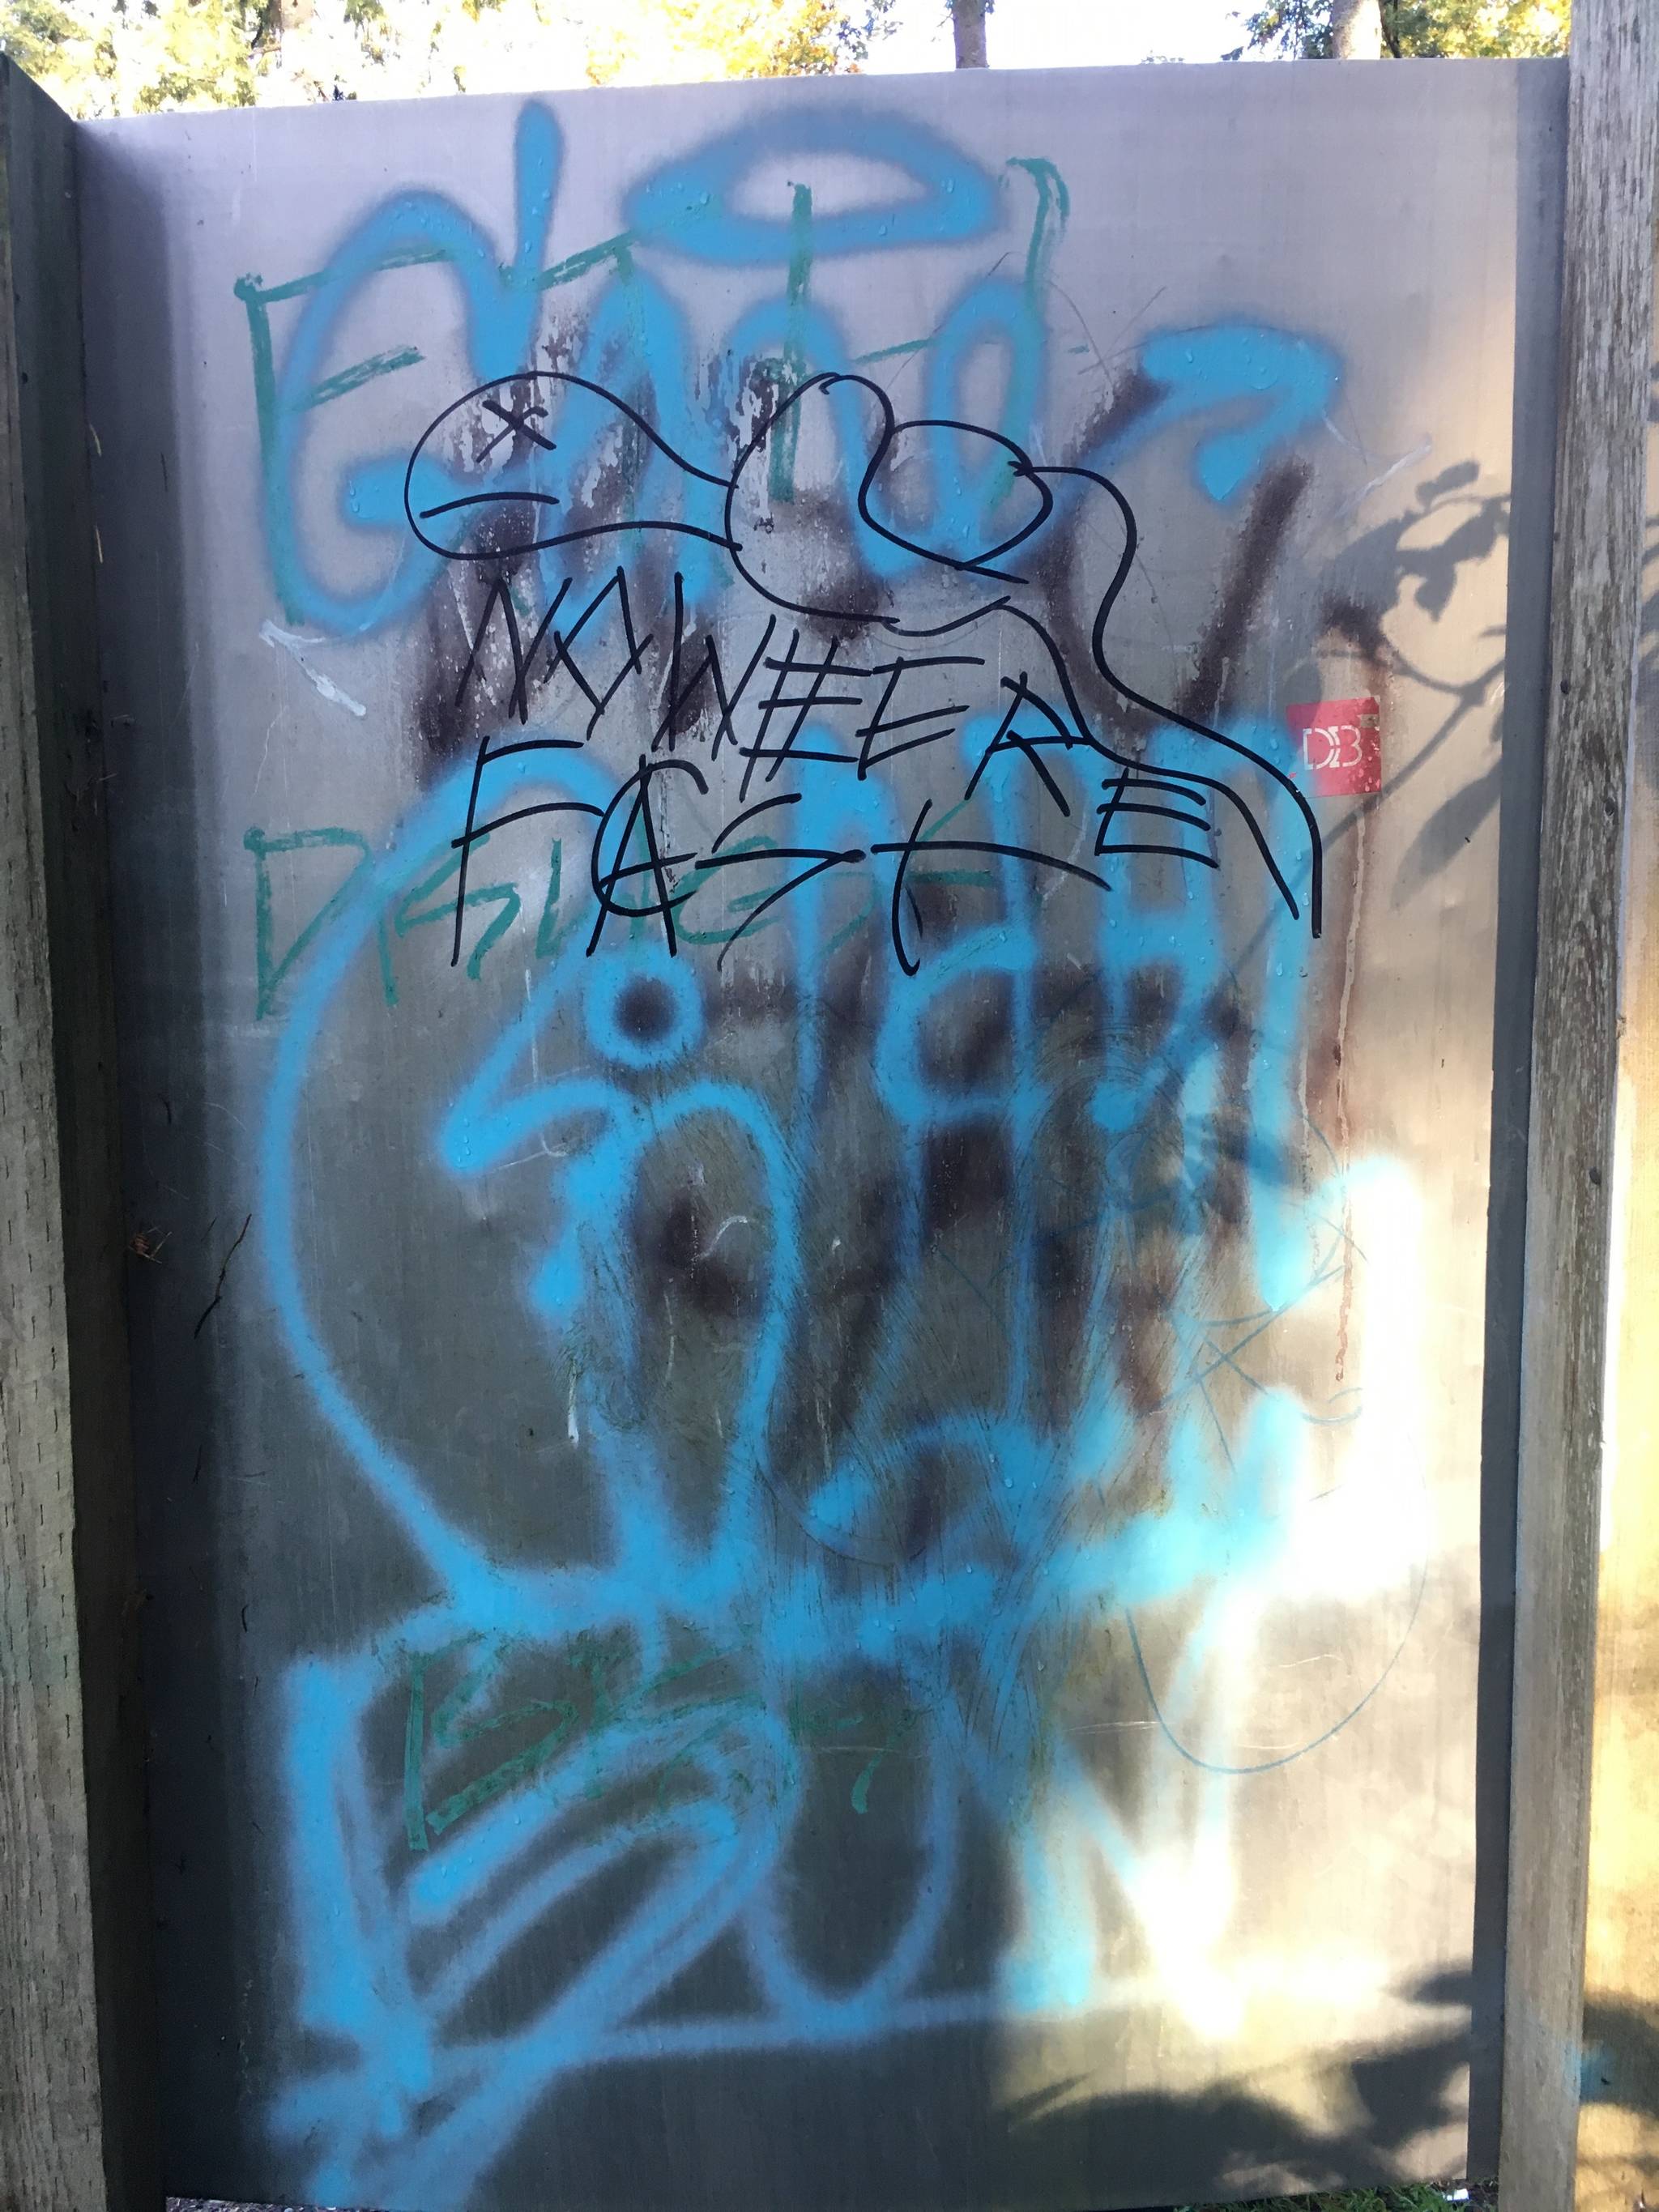 Local businesses scrub-a-dub graffiti from Maple Valley